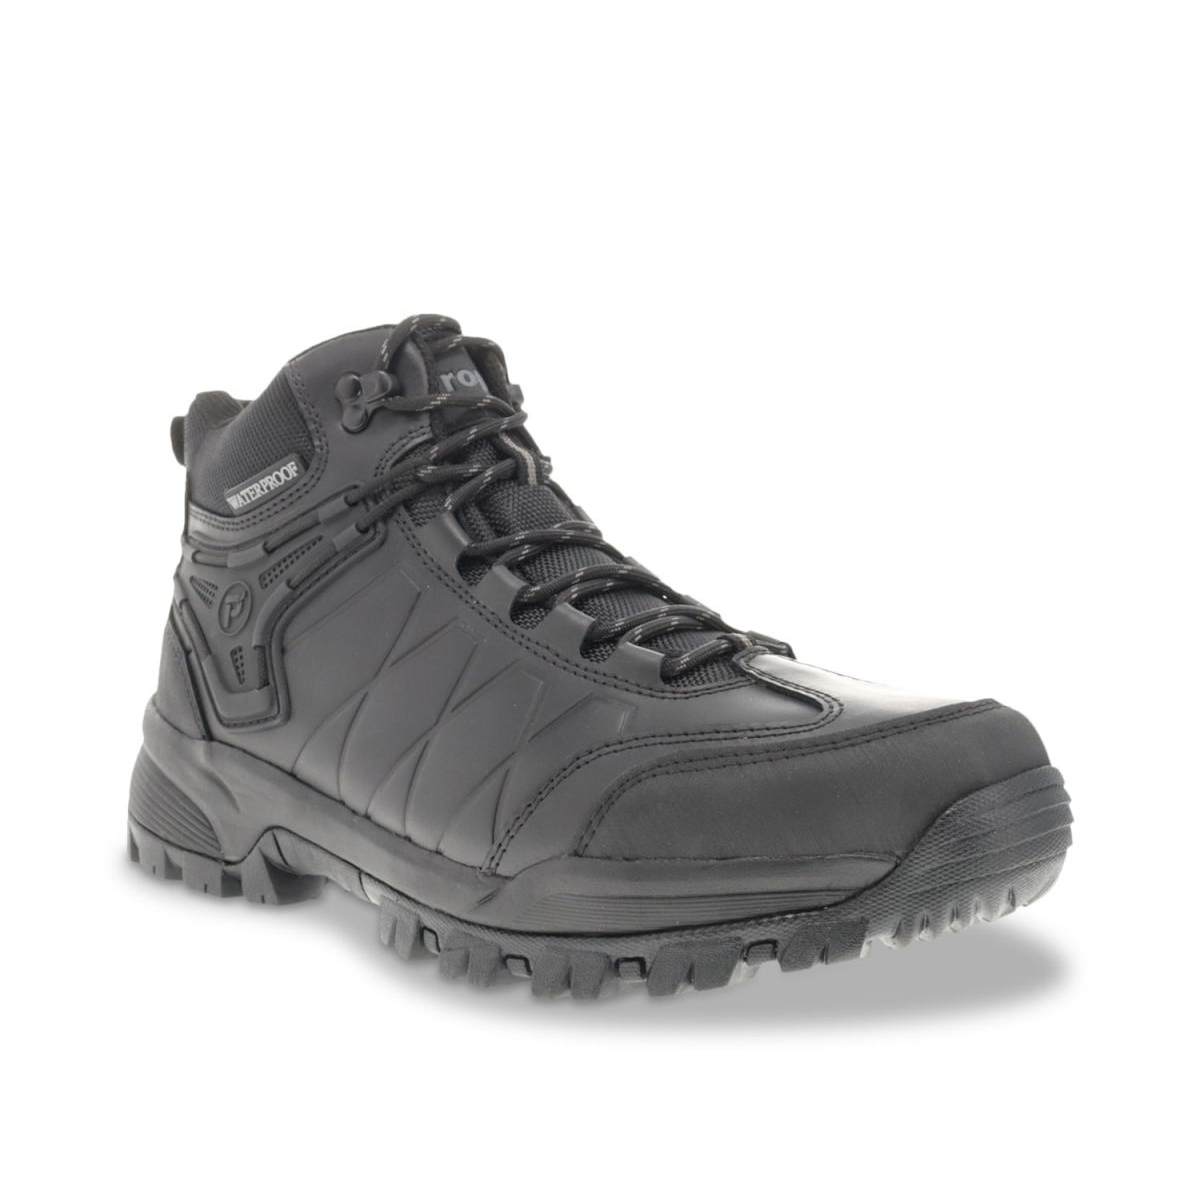 Propet Men's Ridge Walker Force Hiking Boots Black - MBA052LBLK BLACK - BLACK, 9.5 X-Wide